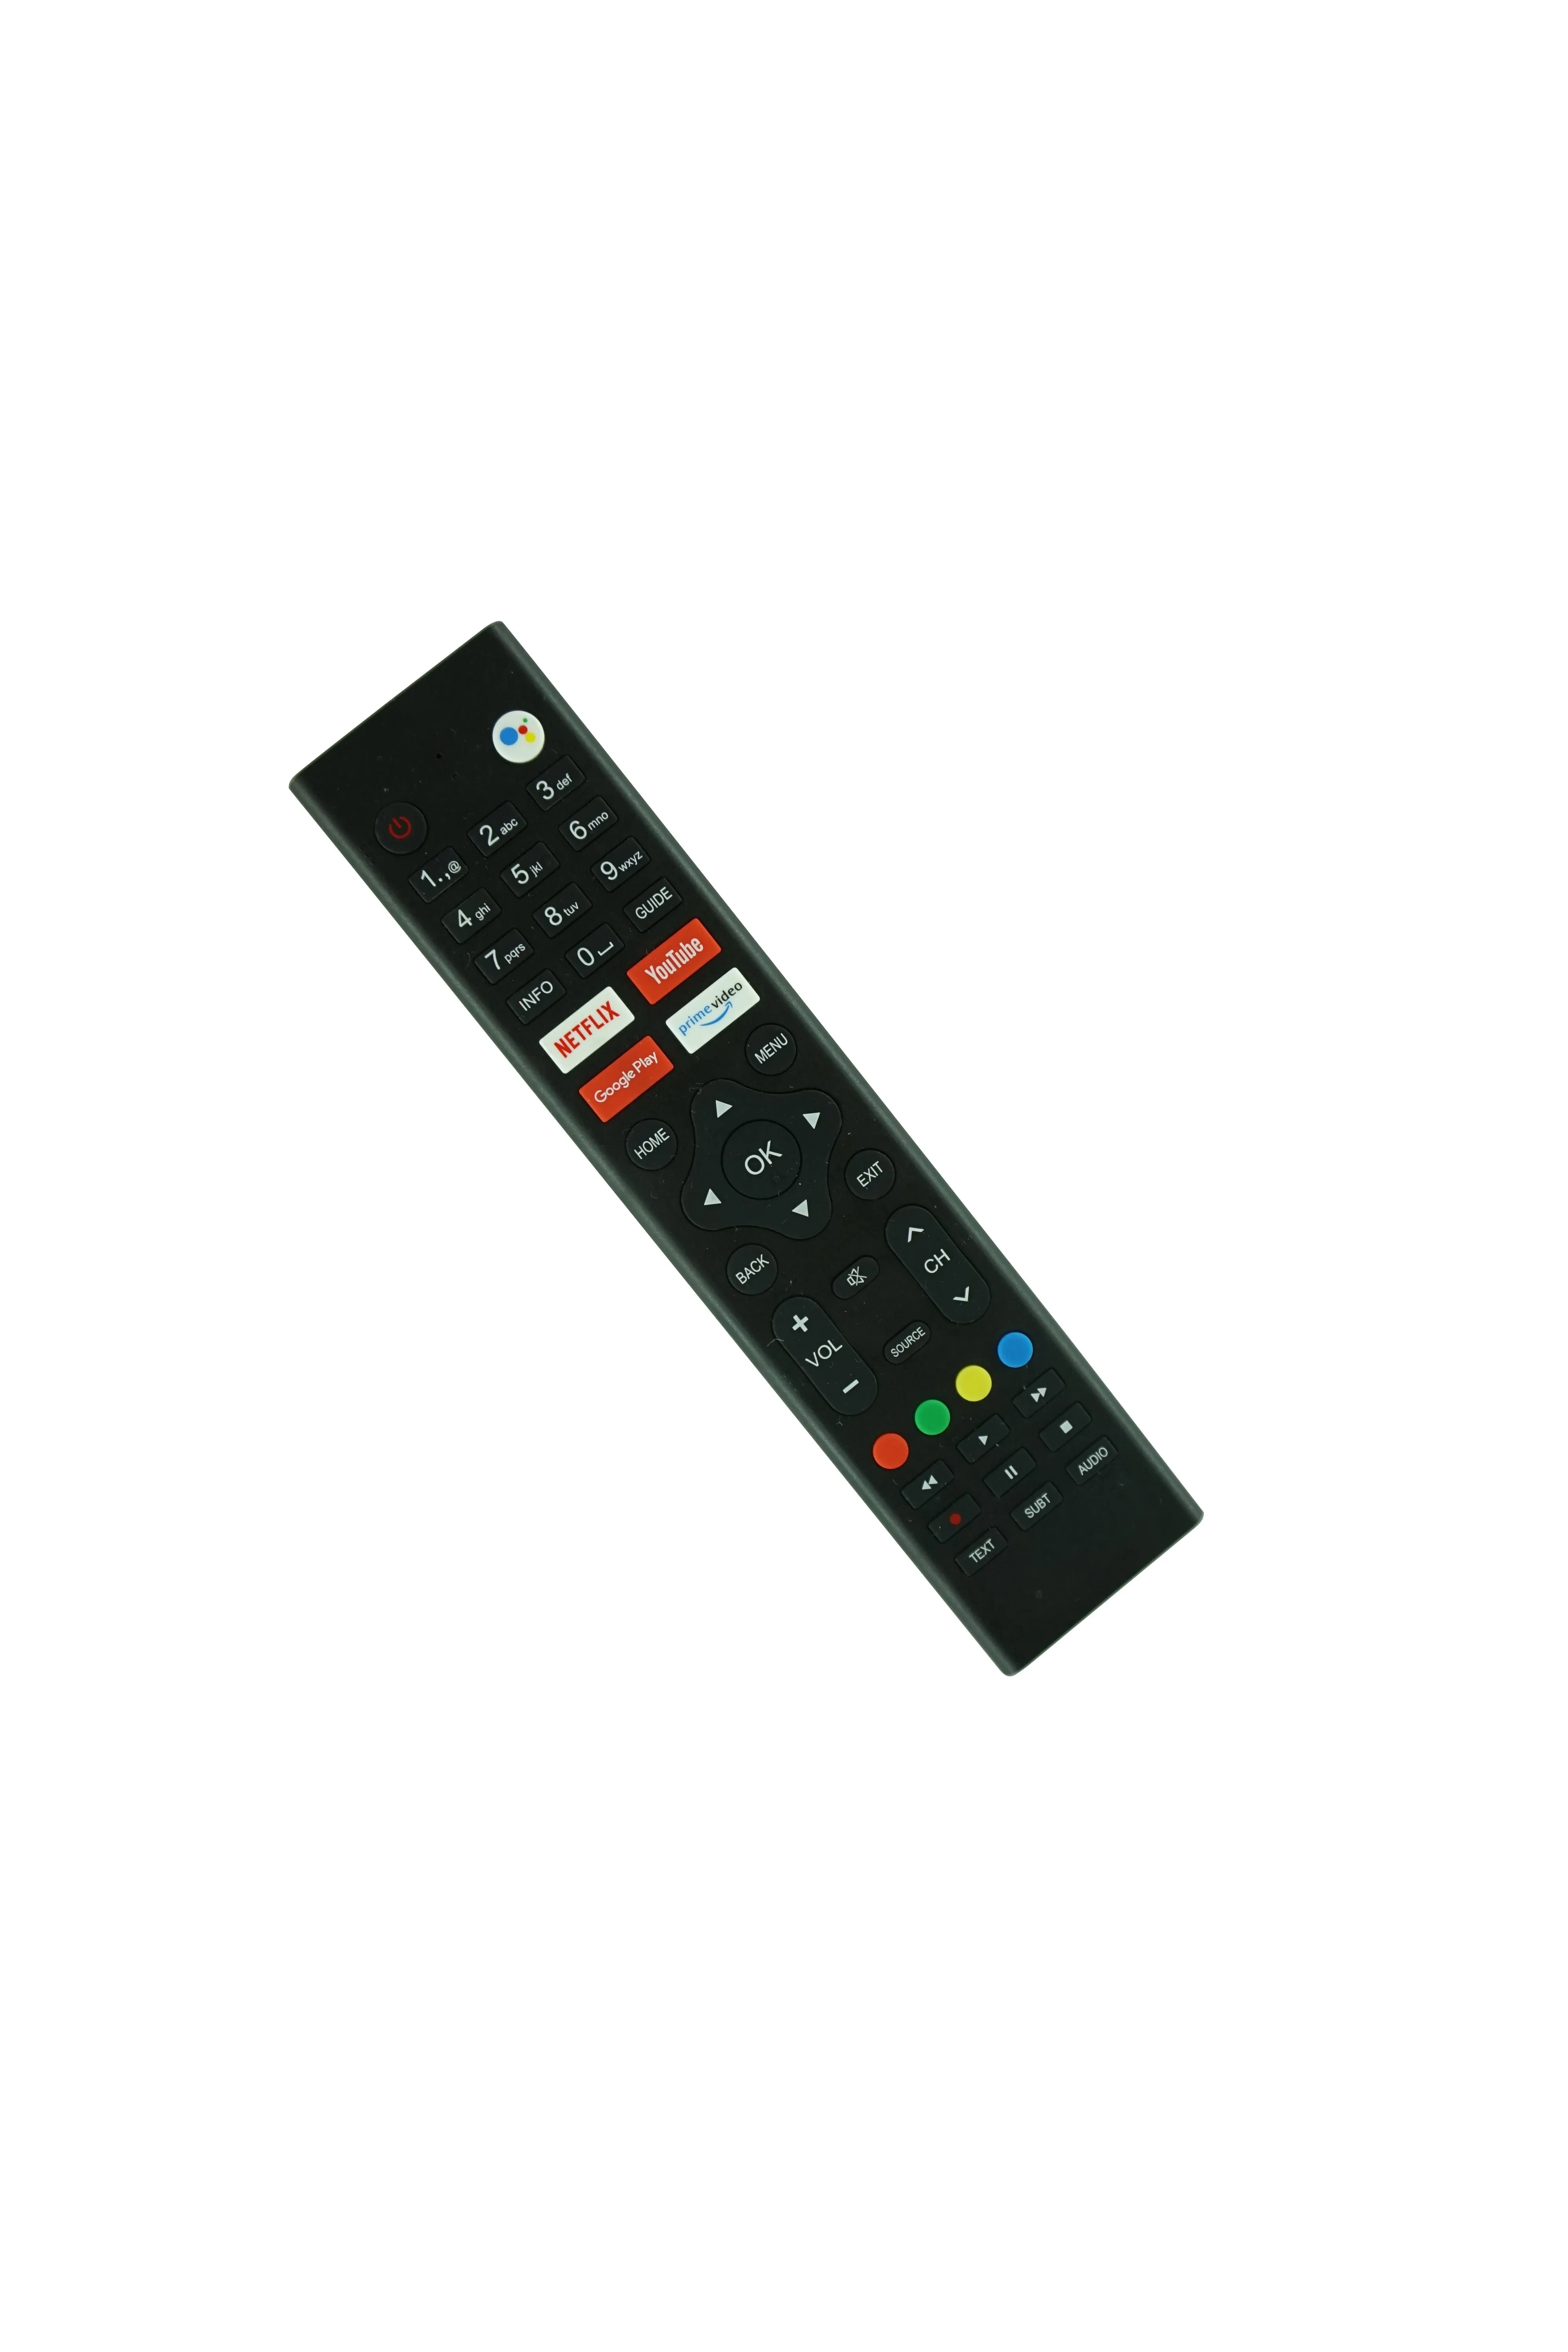 Głowy pilot Bluetooth dla OK. ODL32760HN-TAB ODL40670FN-TAB ODL40760FN-TAB ODL24760HN-TAB ODL24771HN-TAB ODL32761HN-TAB SMART LED LCD HDTV Android TV